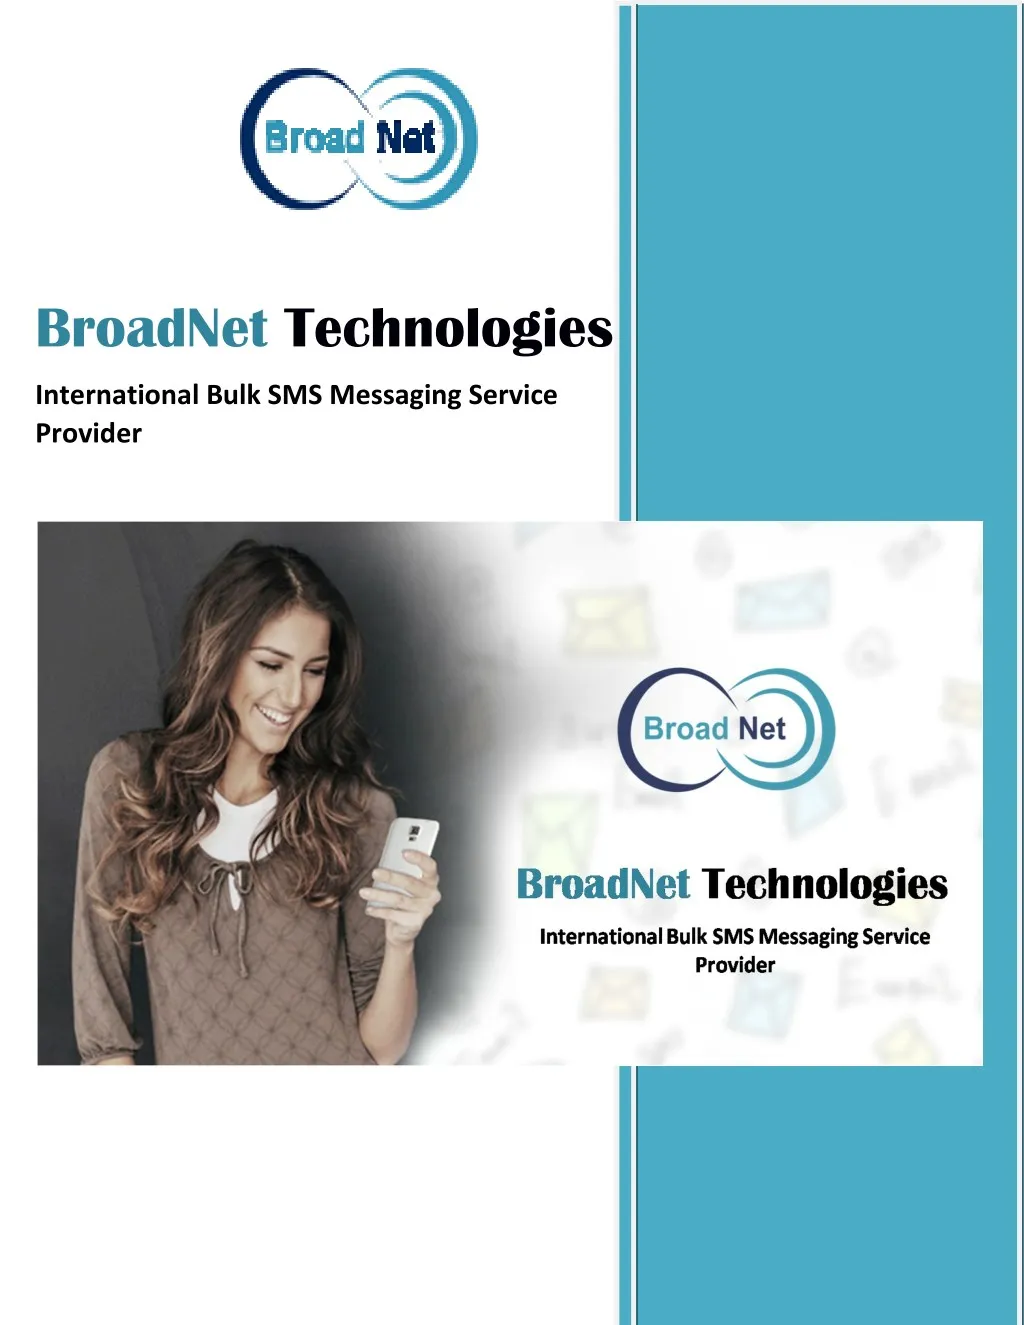 broadnet technologies